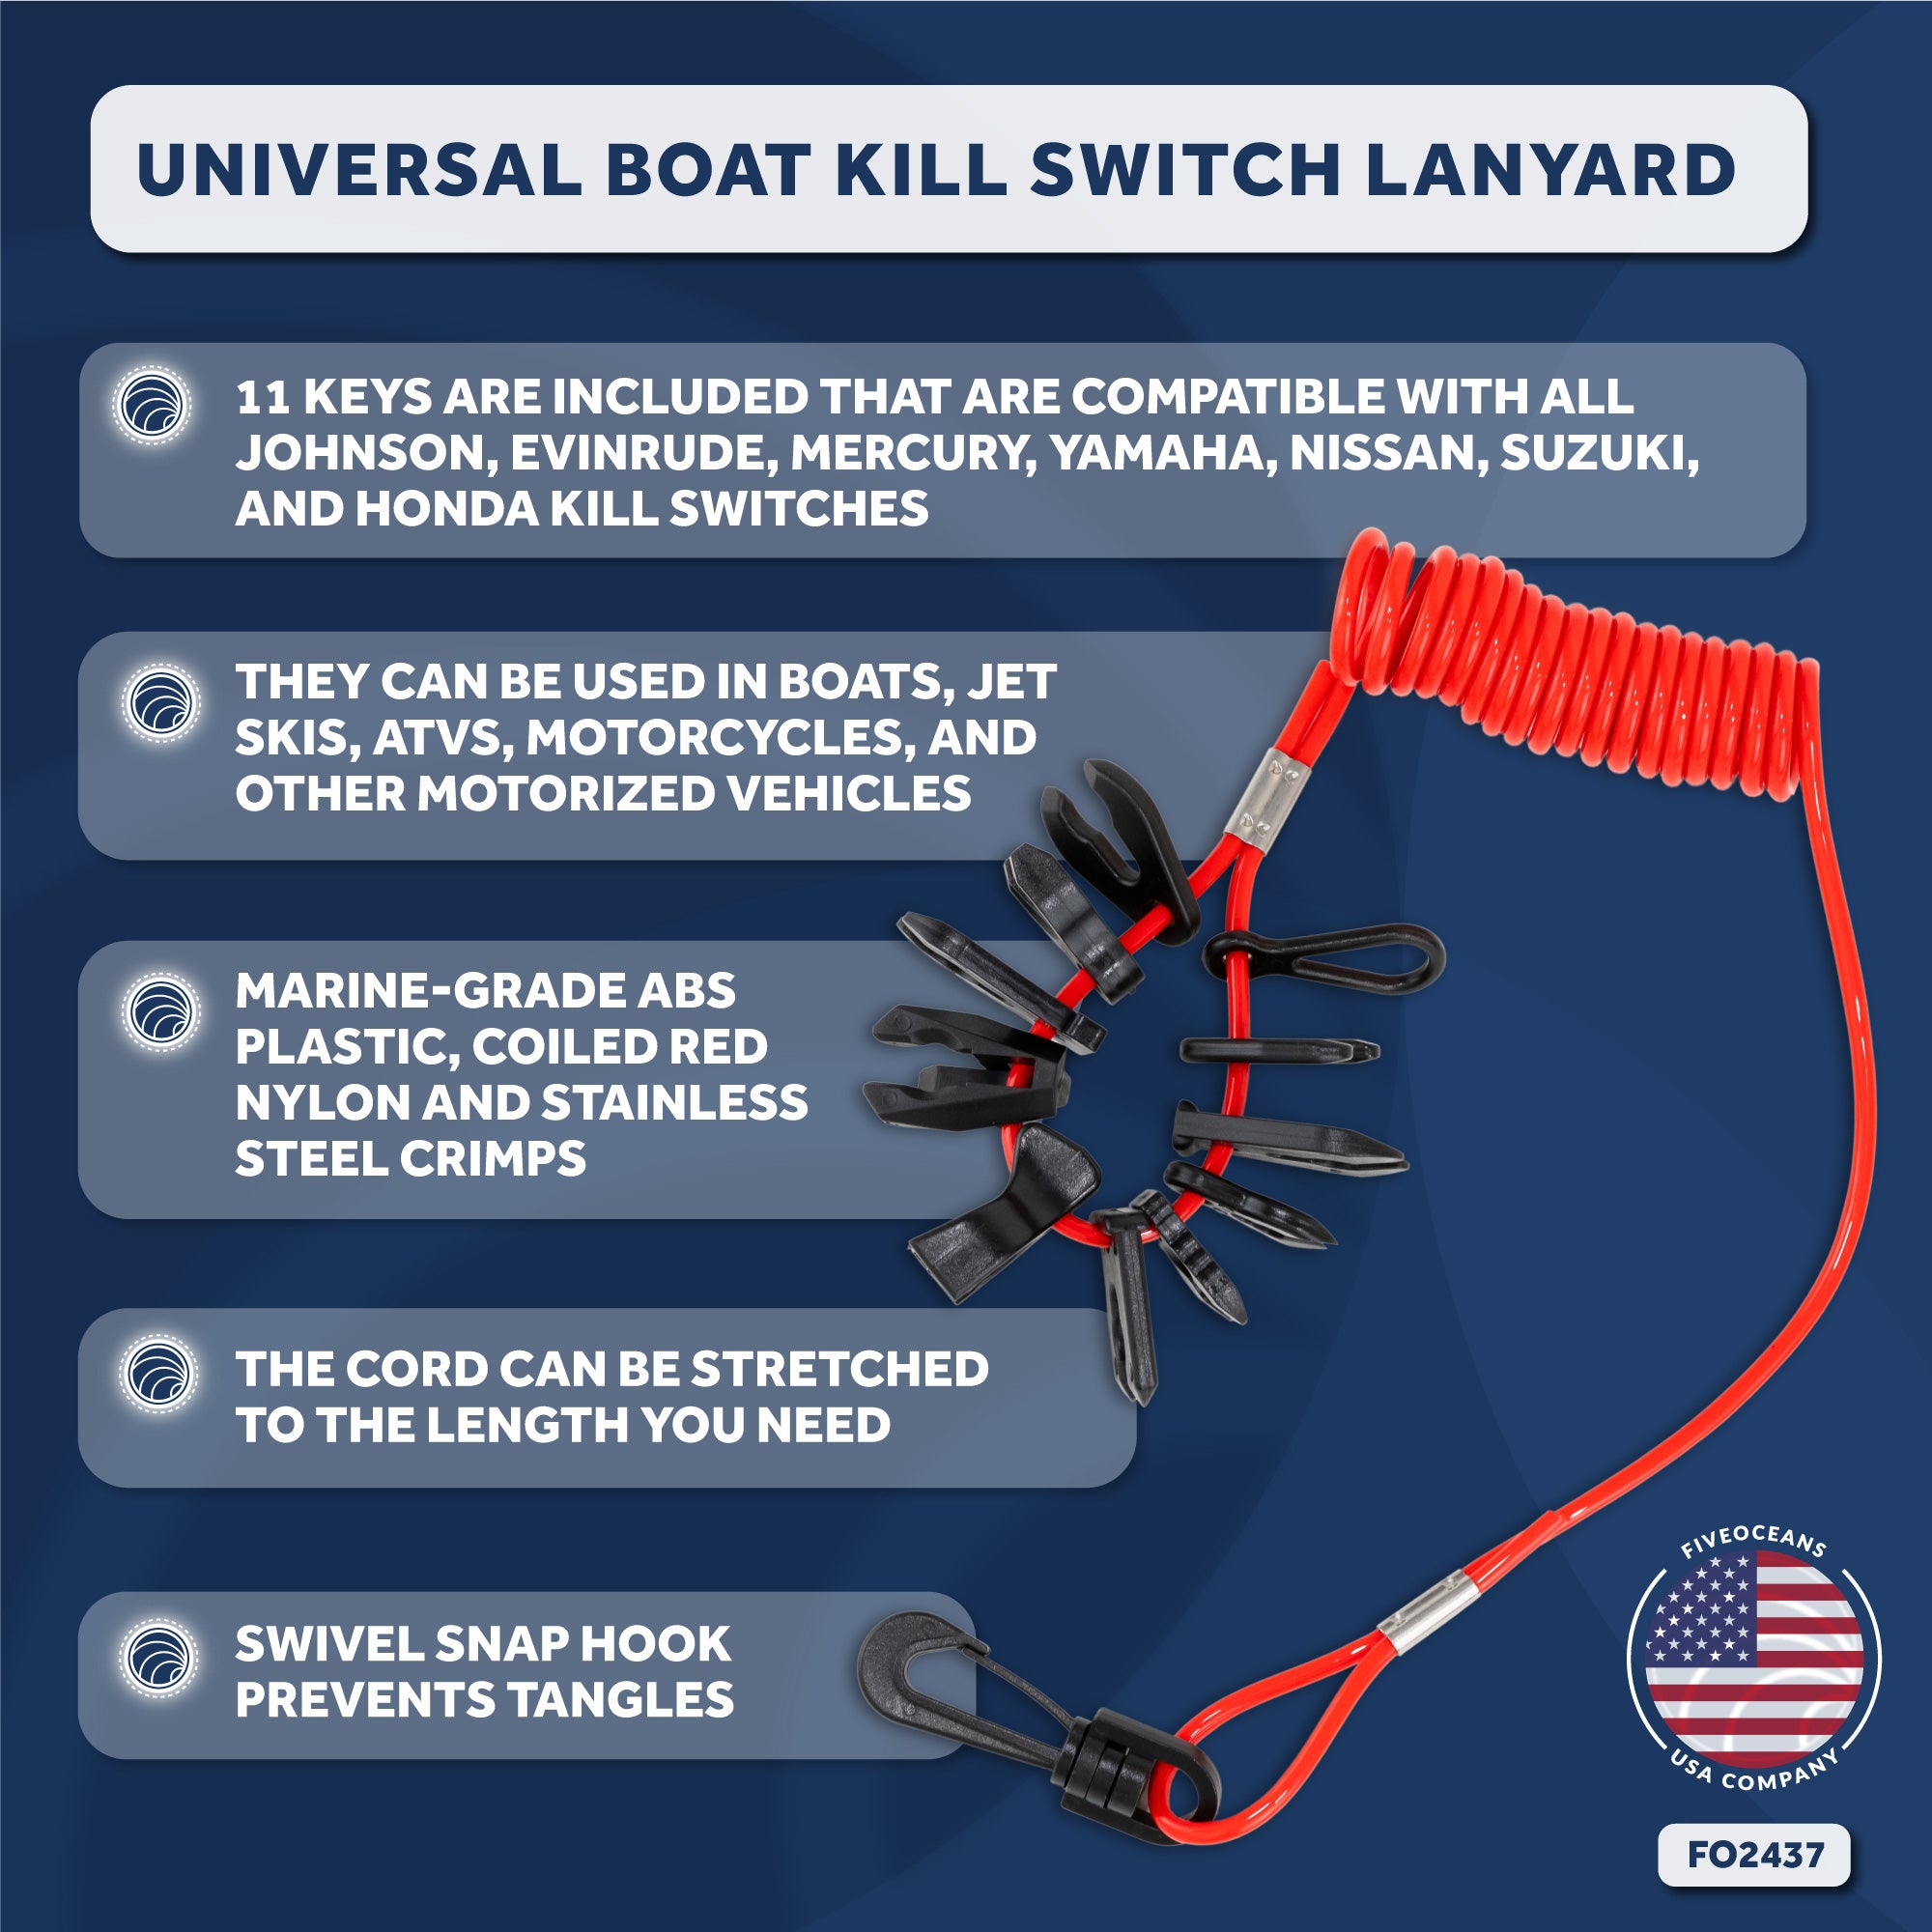 Five Oceans Universal Boat Kill Switch Lanyard, Key Set for Johnson, Evinrude, Mercury, Yamaha, Honda, Tohatsu, Suzuki, Kawasaki, OMC and Nissan